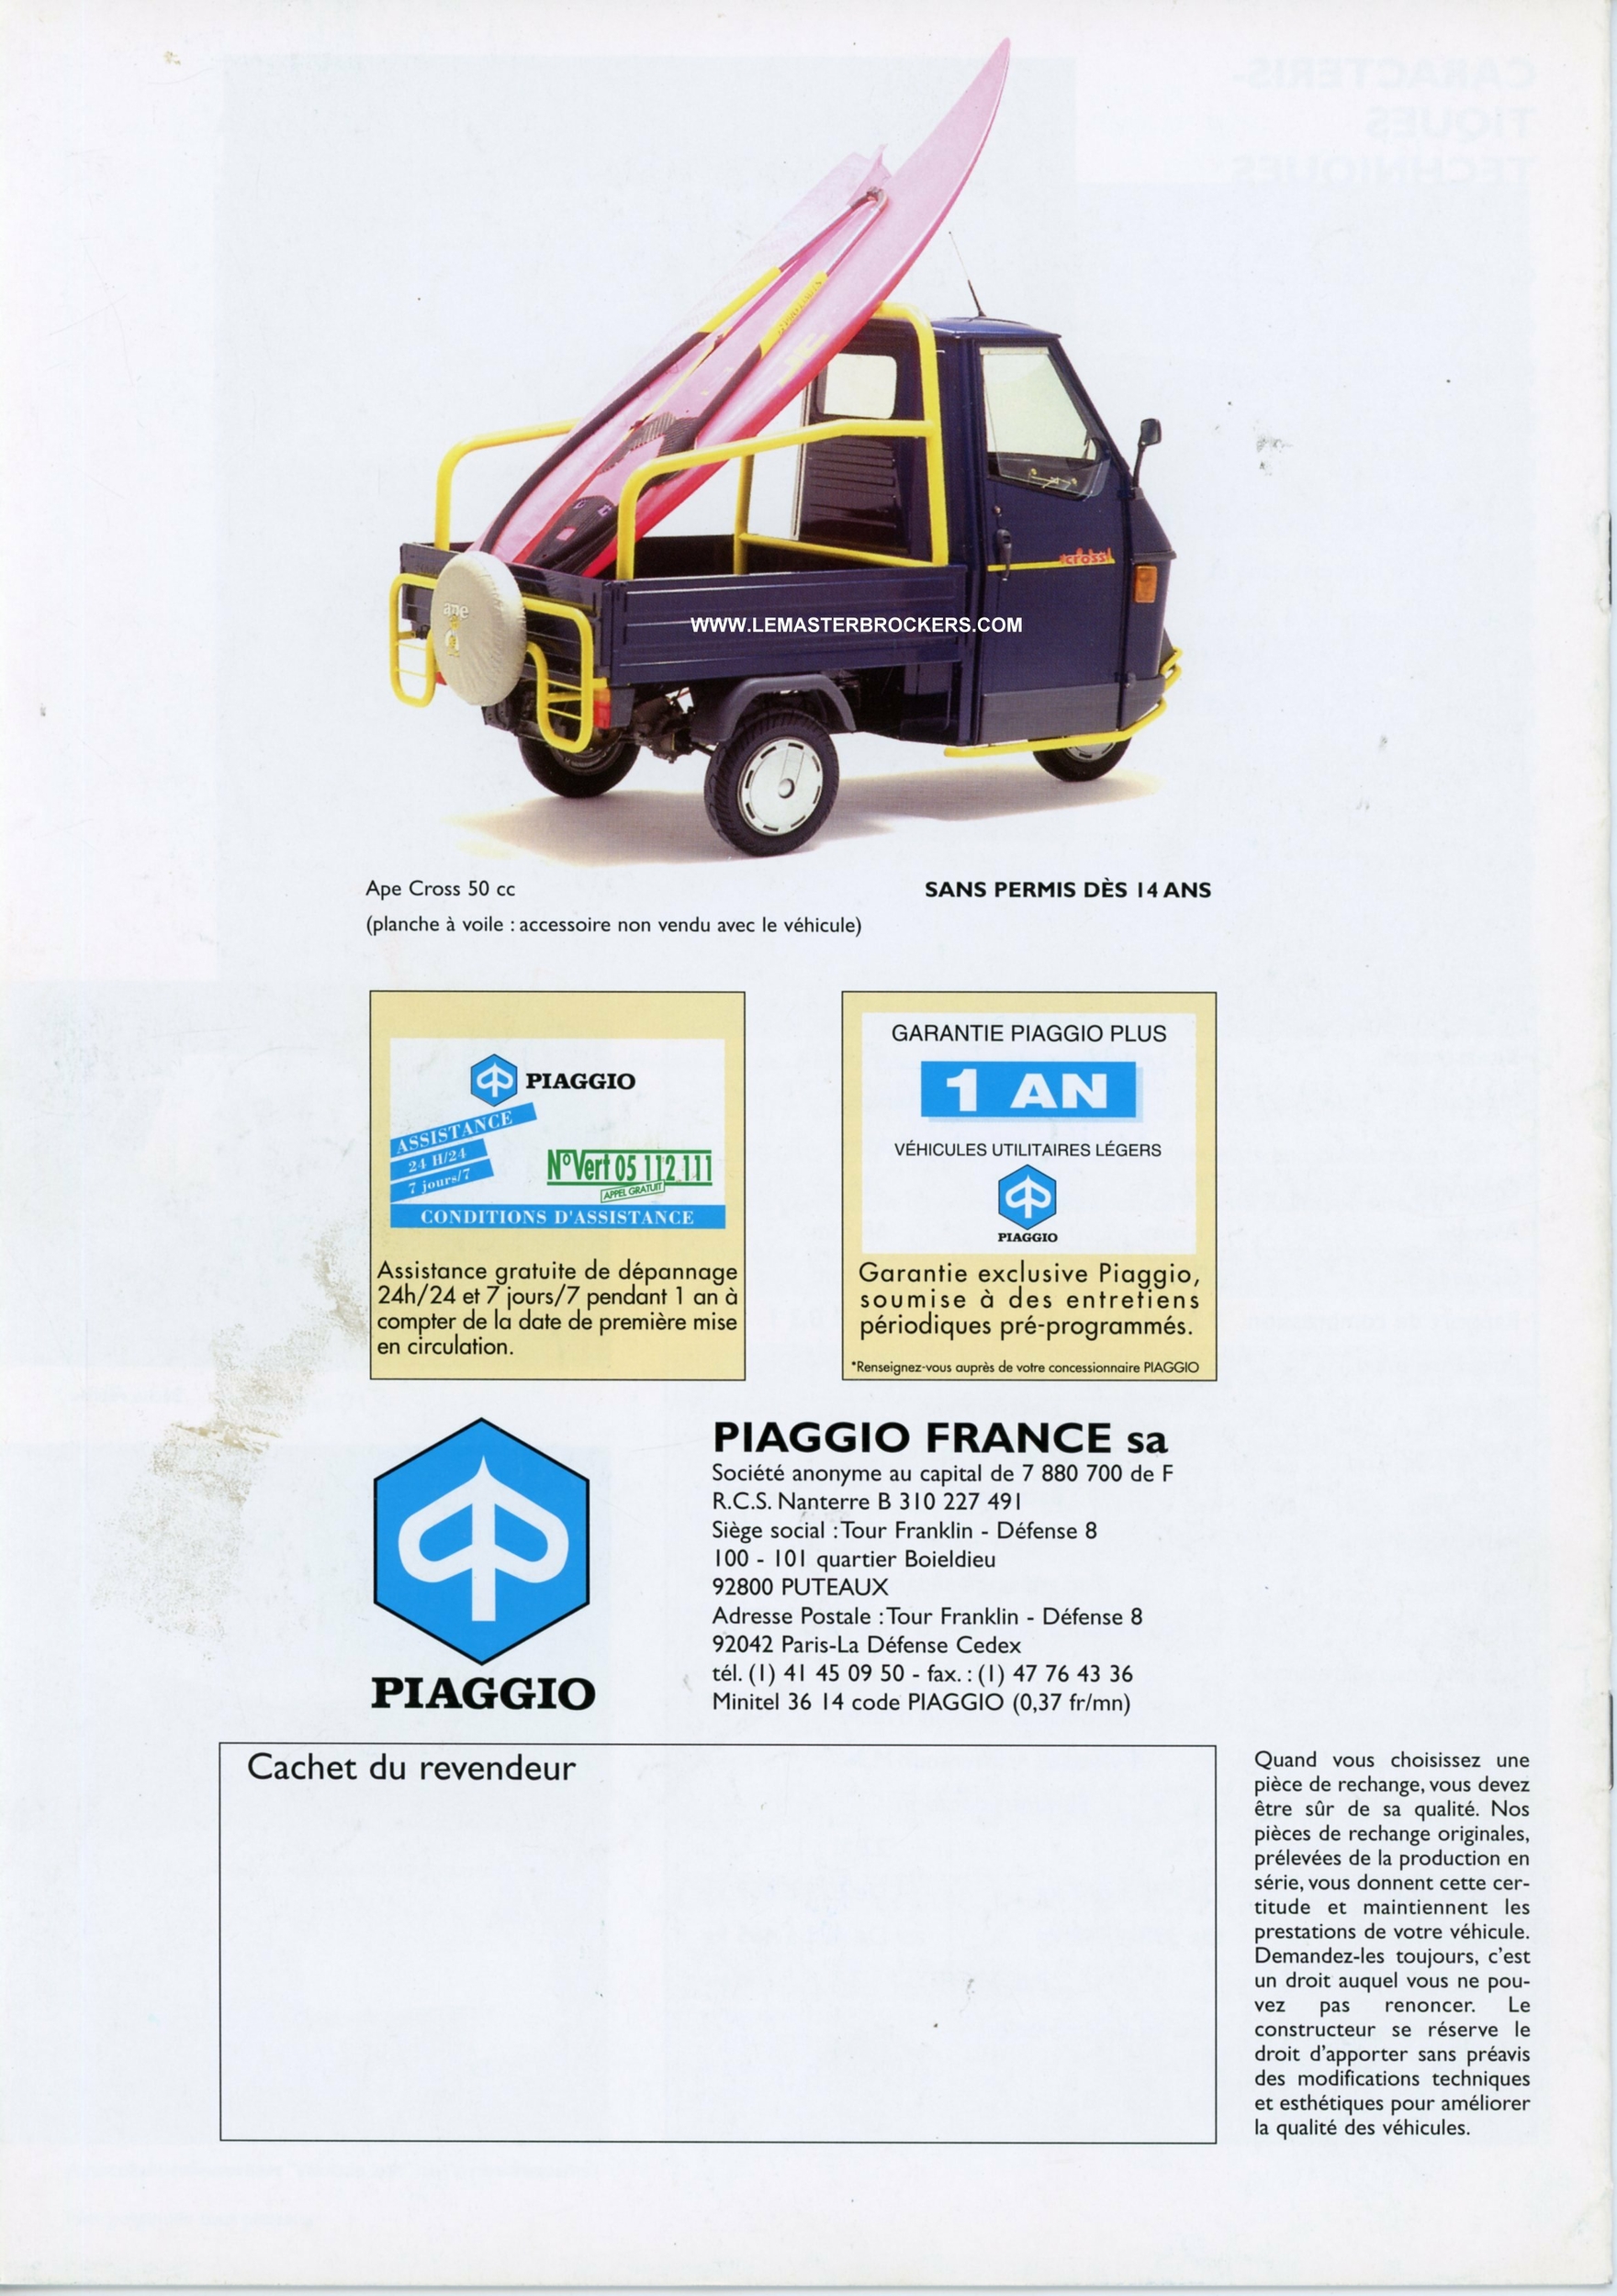 brochure-VESPA-CAR-TM50-TM220-TM125-lemasterbrockers-CATALOGUE-TRICYLE-VESPACAR